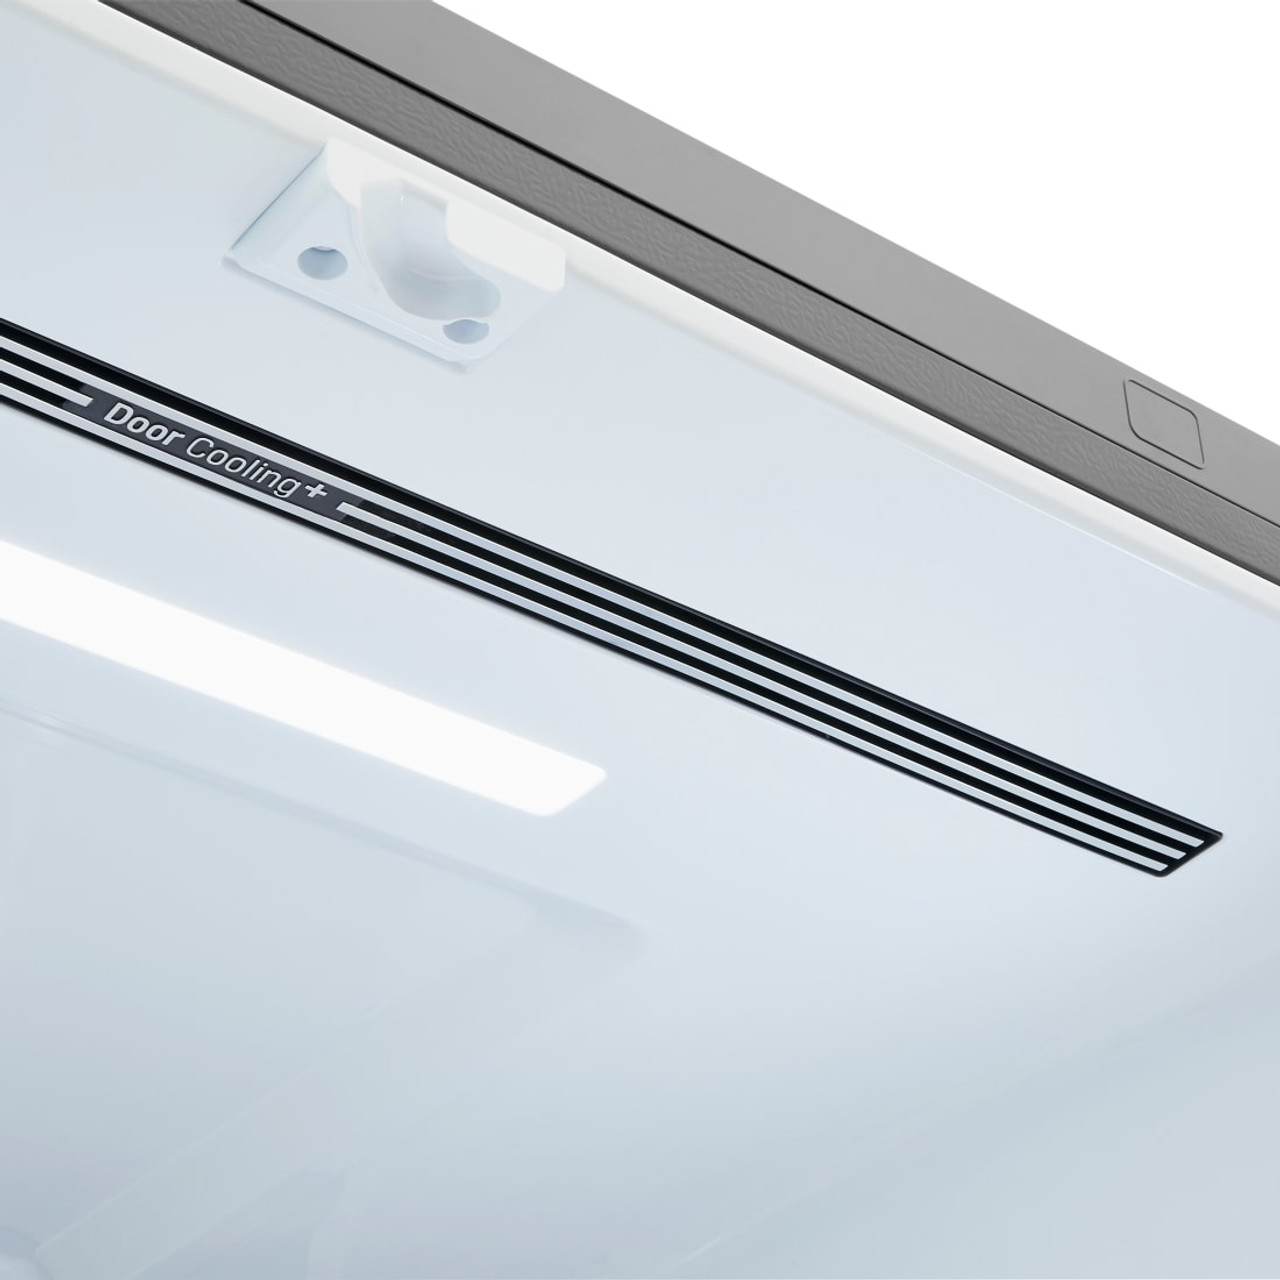 LG 24 cu. ft. Smart Wi-Fi Enabled Door-in-Door Counter-Depth Refrigerator with Craft Ice Maker - LRFDC2406S